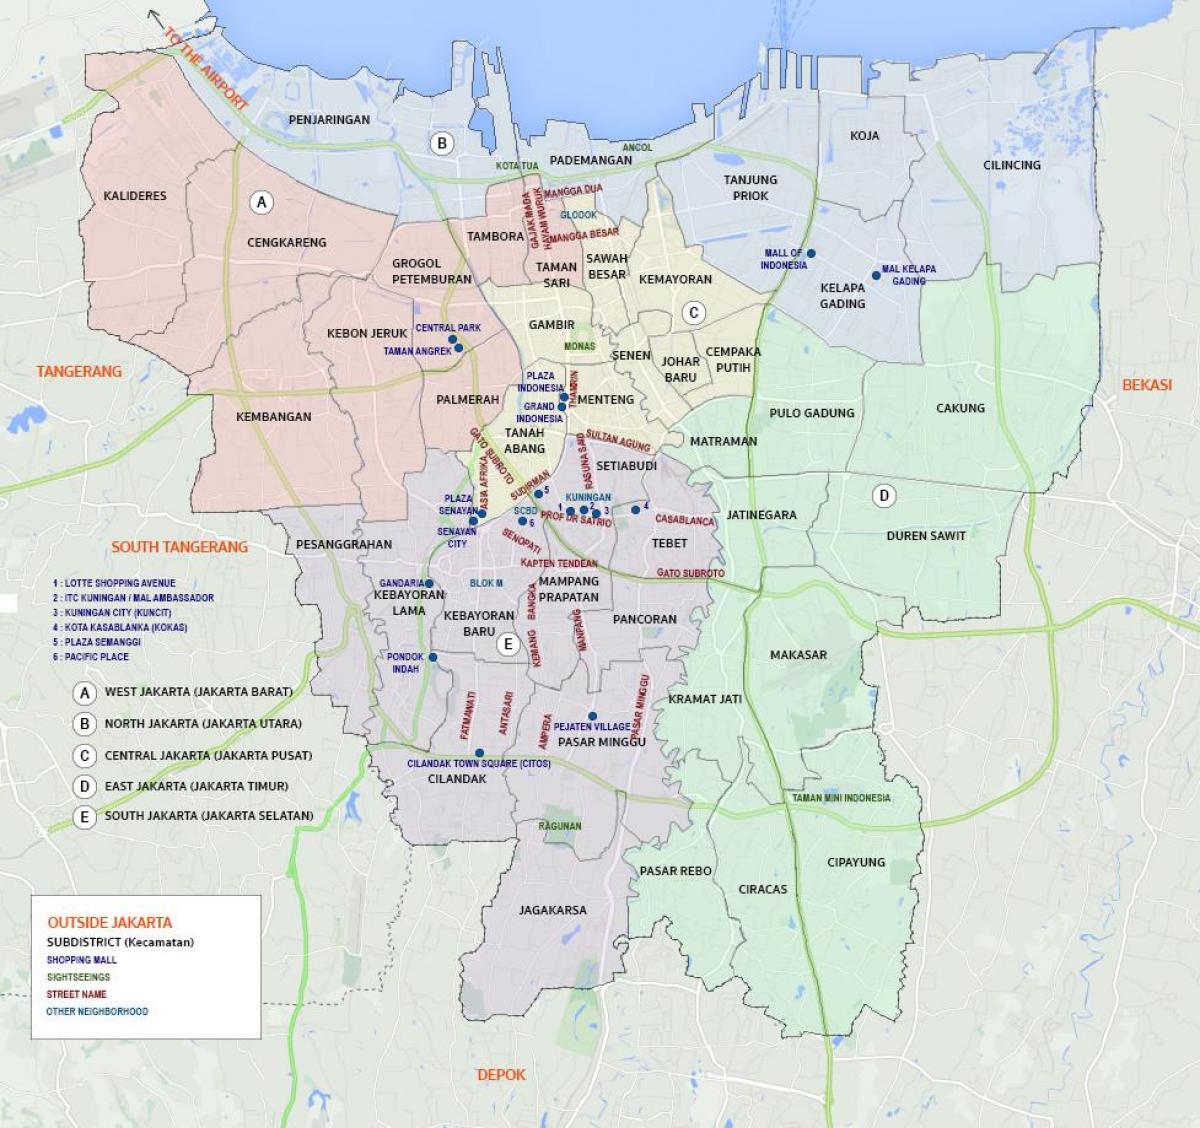 Endonezya'nın başkenti şehir haritası